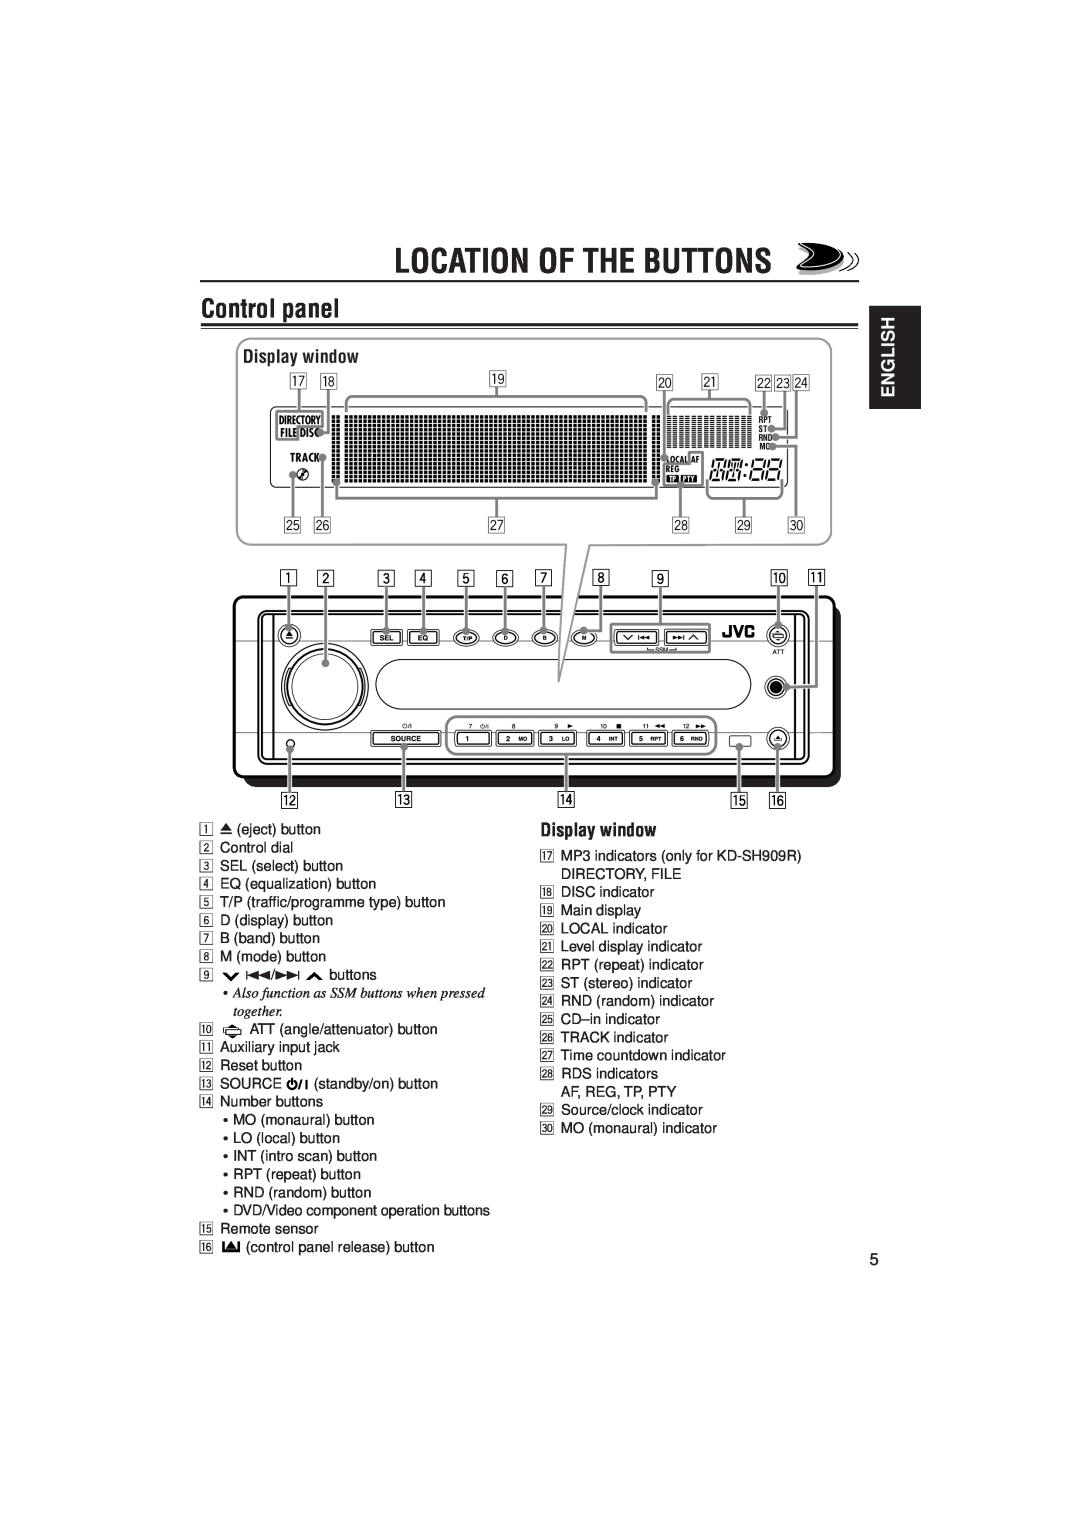 JVC KD-SH707R, KD-SH909R manual Location Of The Buttons, Control panel, Display window, English 